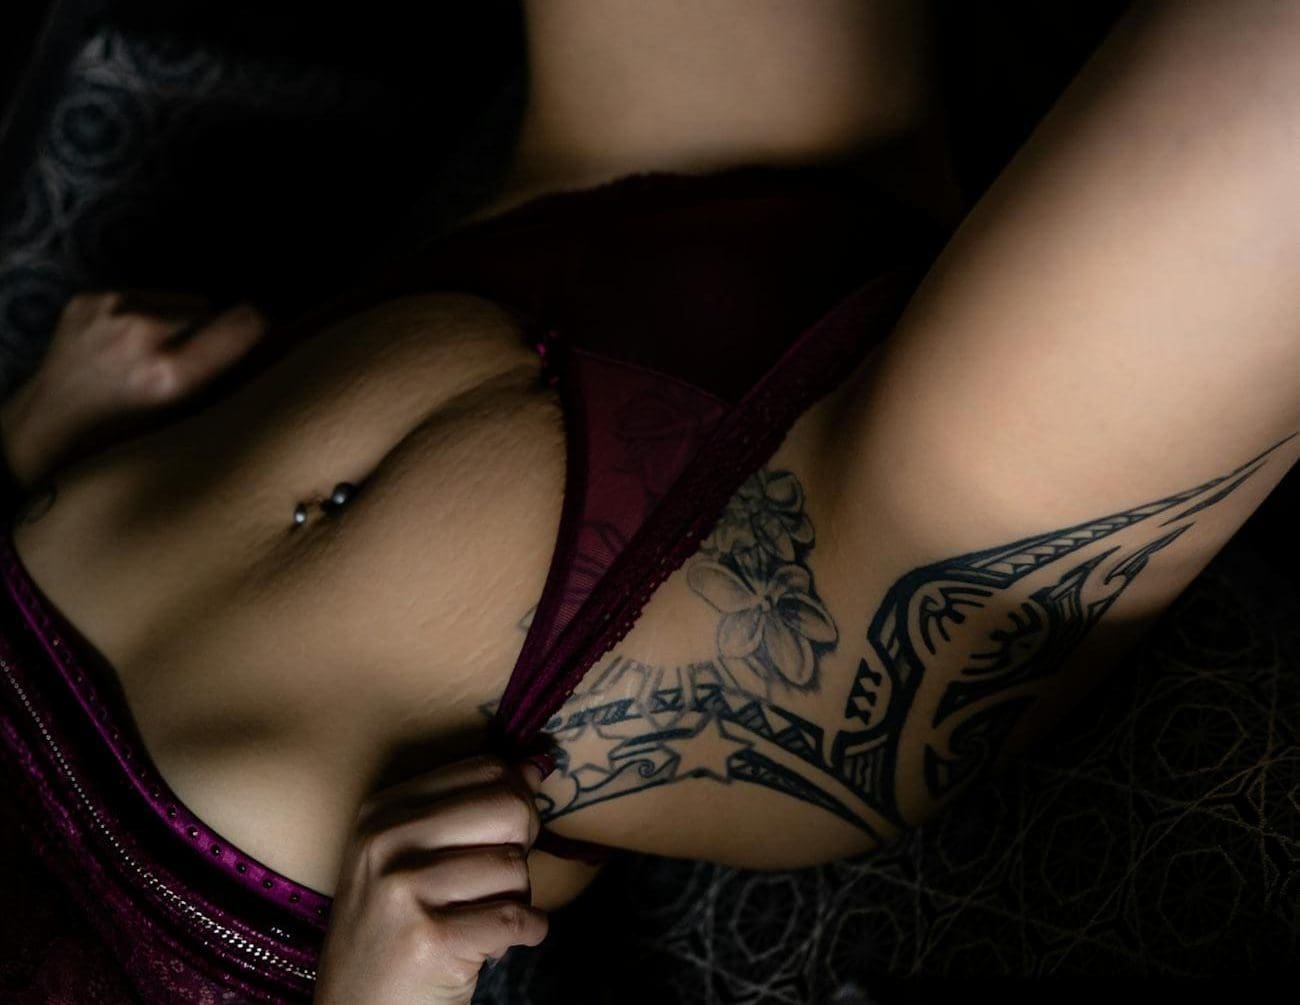 sexy tattooed woman pulling panties